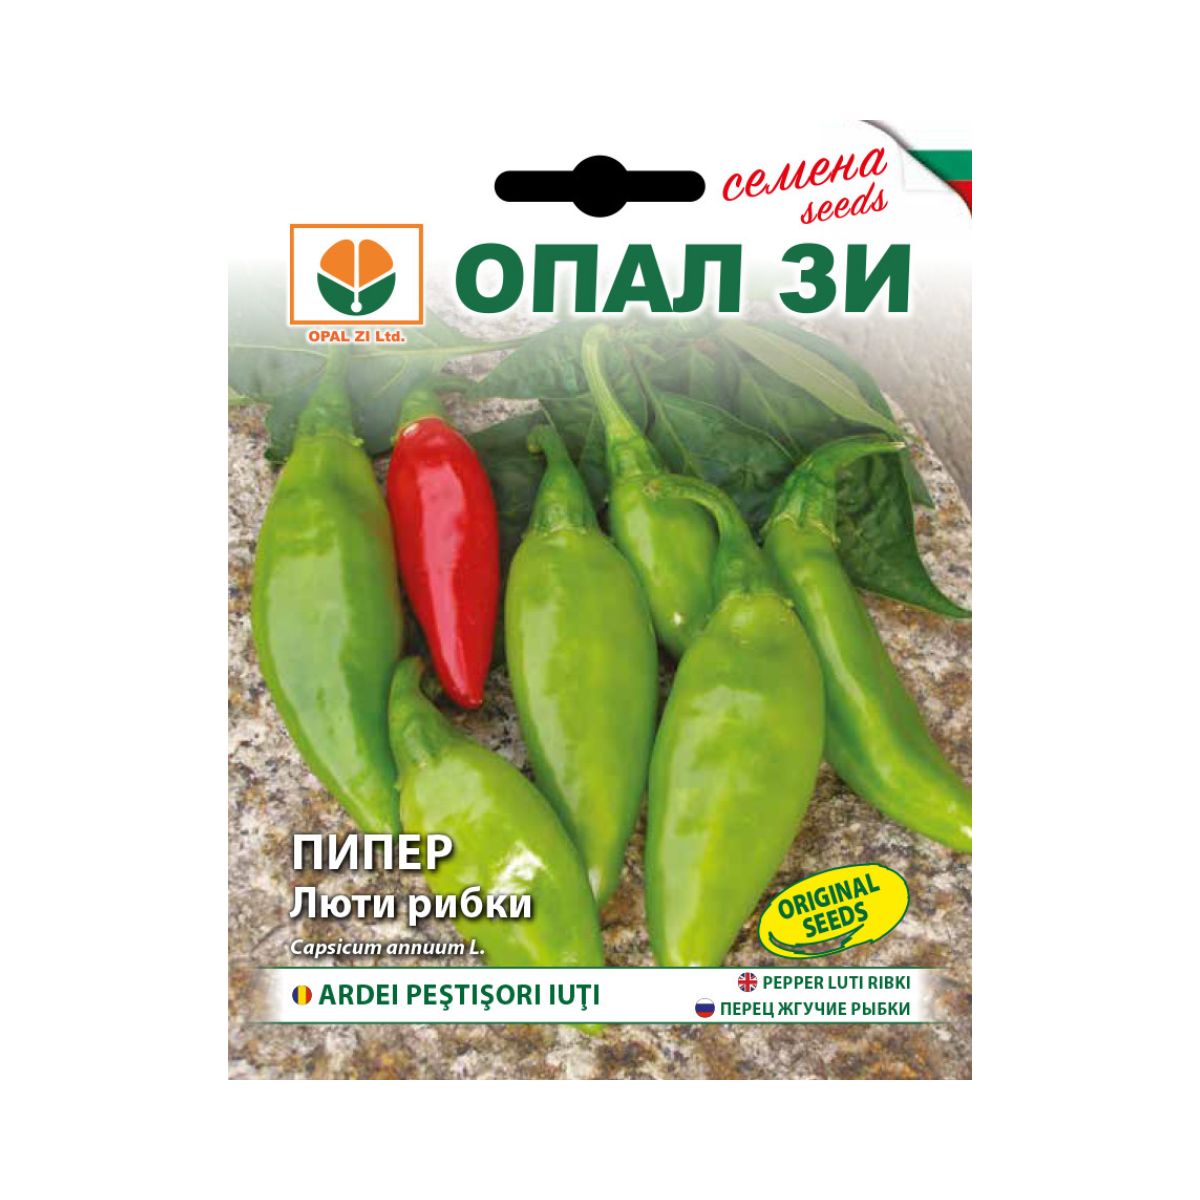 Ardei - Seminte ardei Pestisori iute- 2 grame OPAL, hectarul.ro